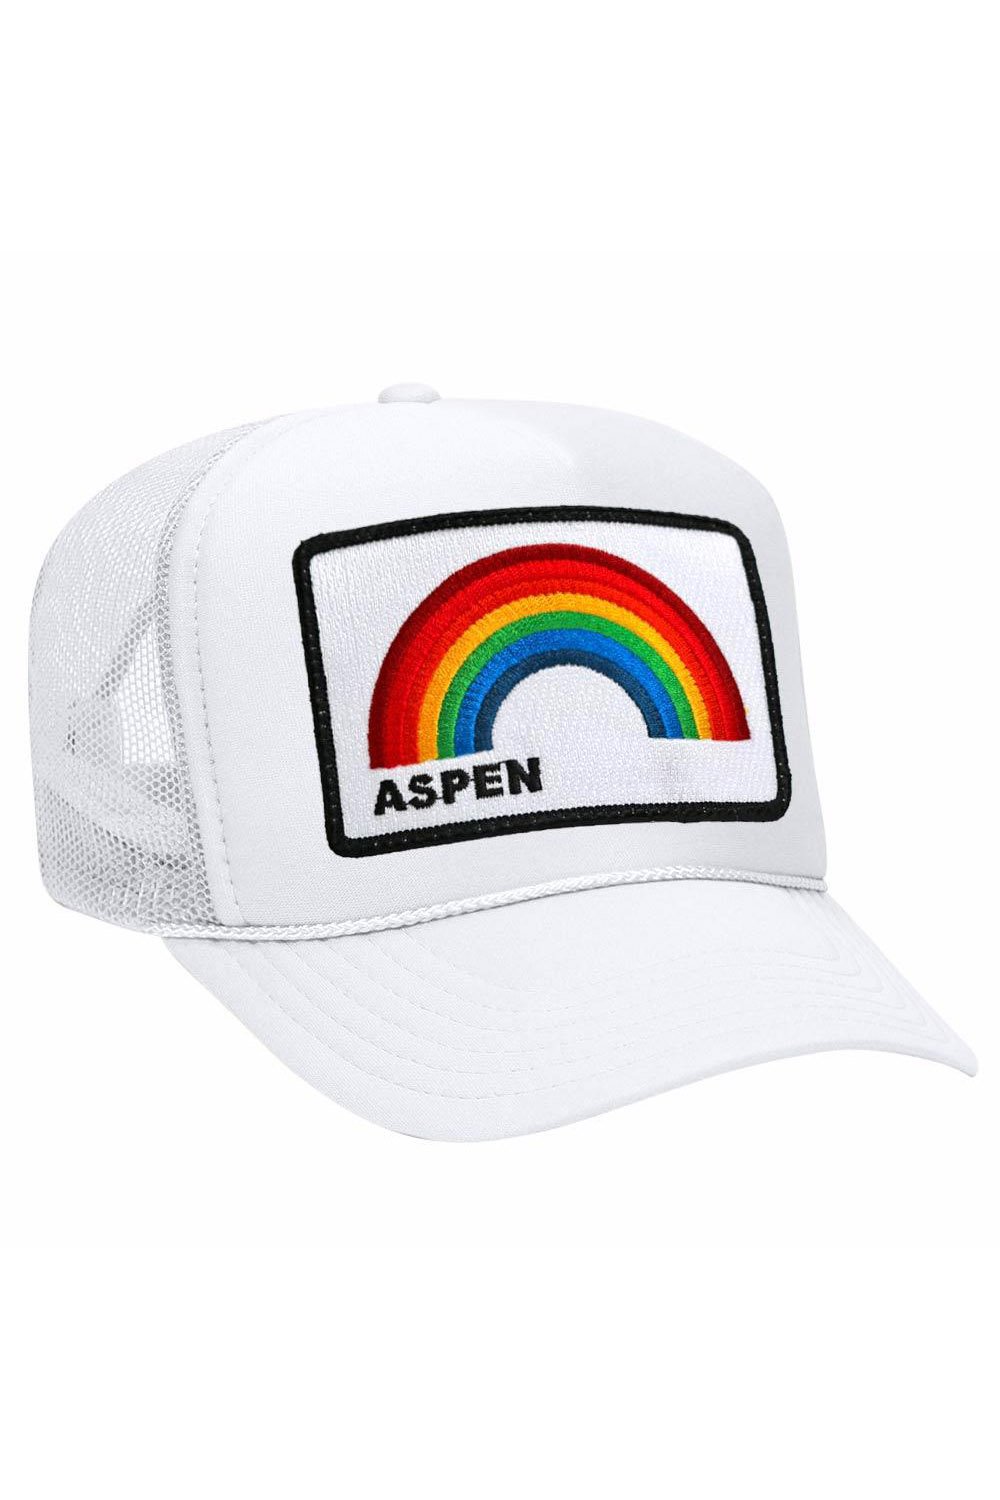 ASPEN RAINBOW TRUCKER HAT HATS Aviator Nation OS WHITE 